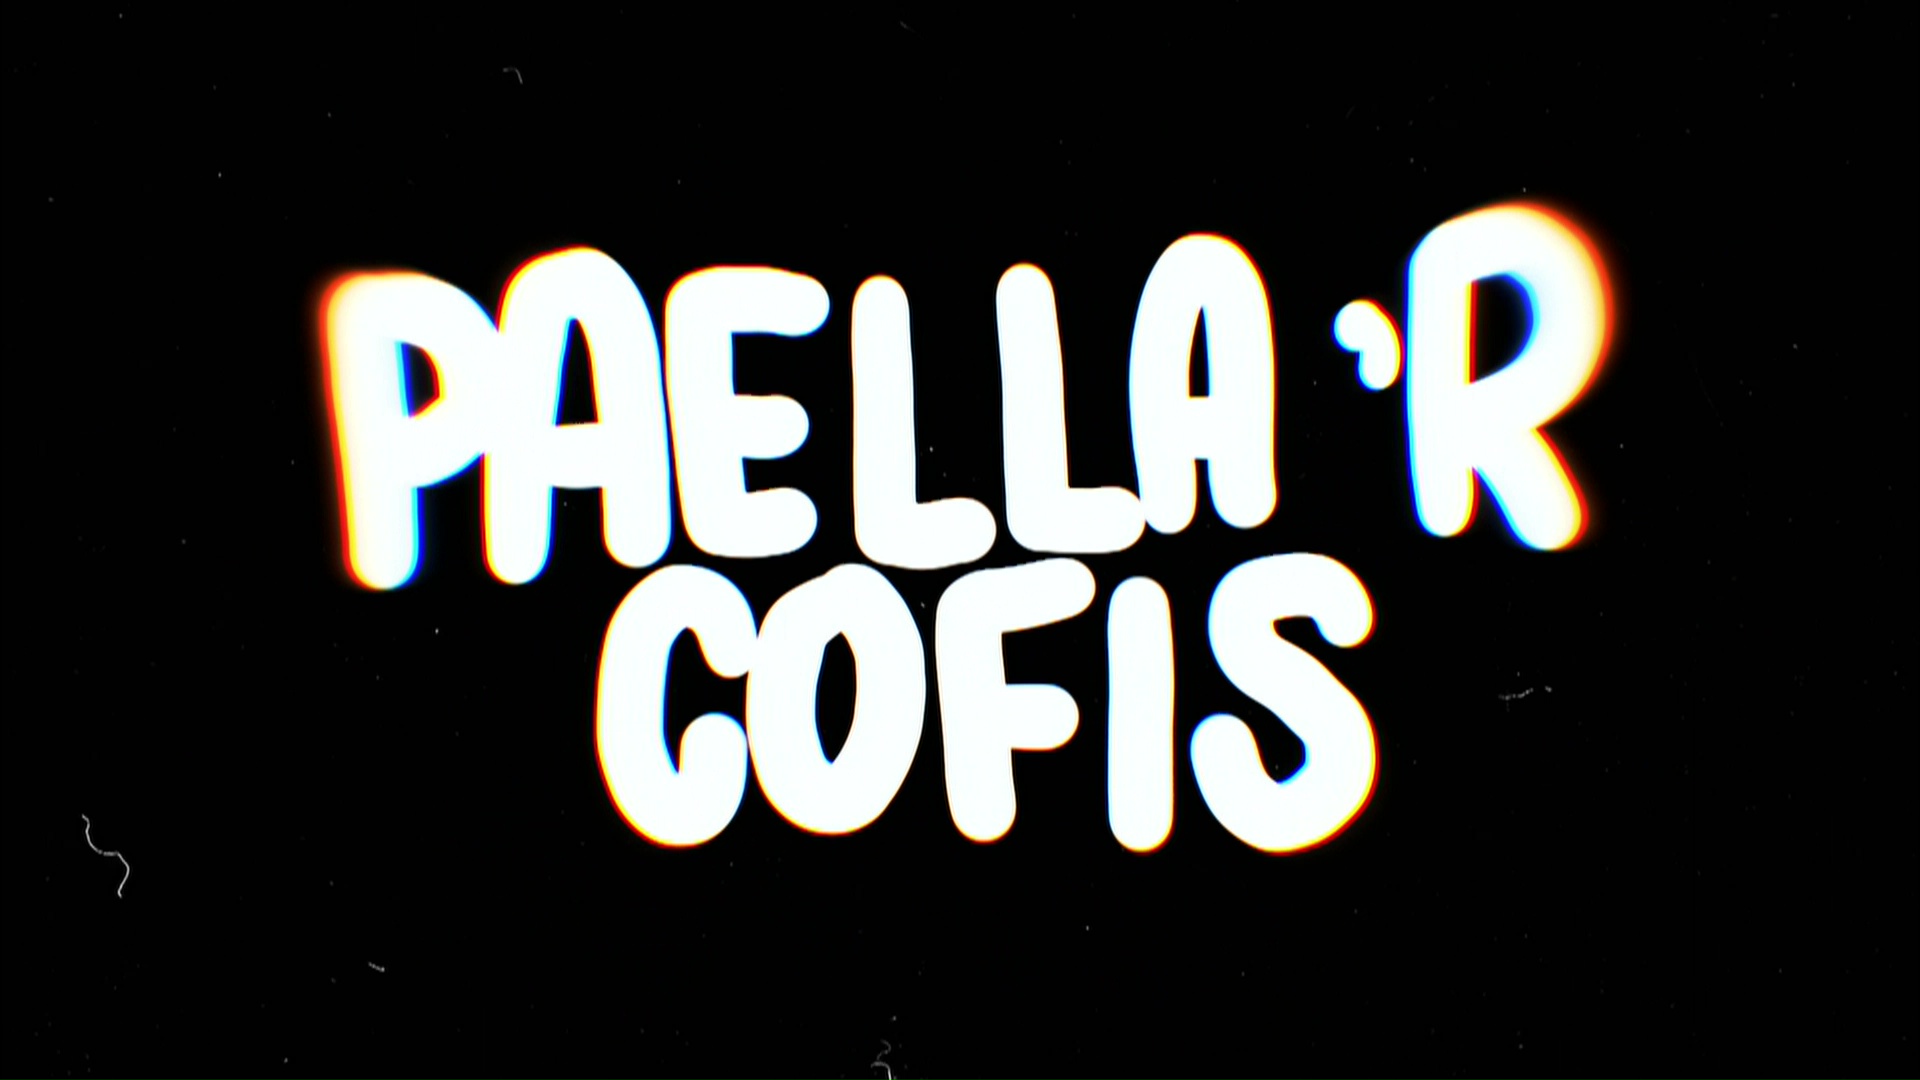 Paella'r Cofis